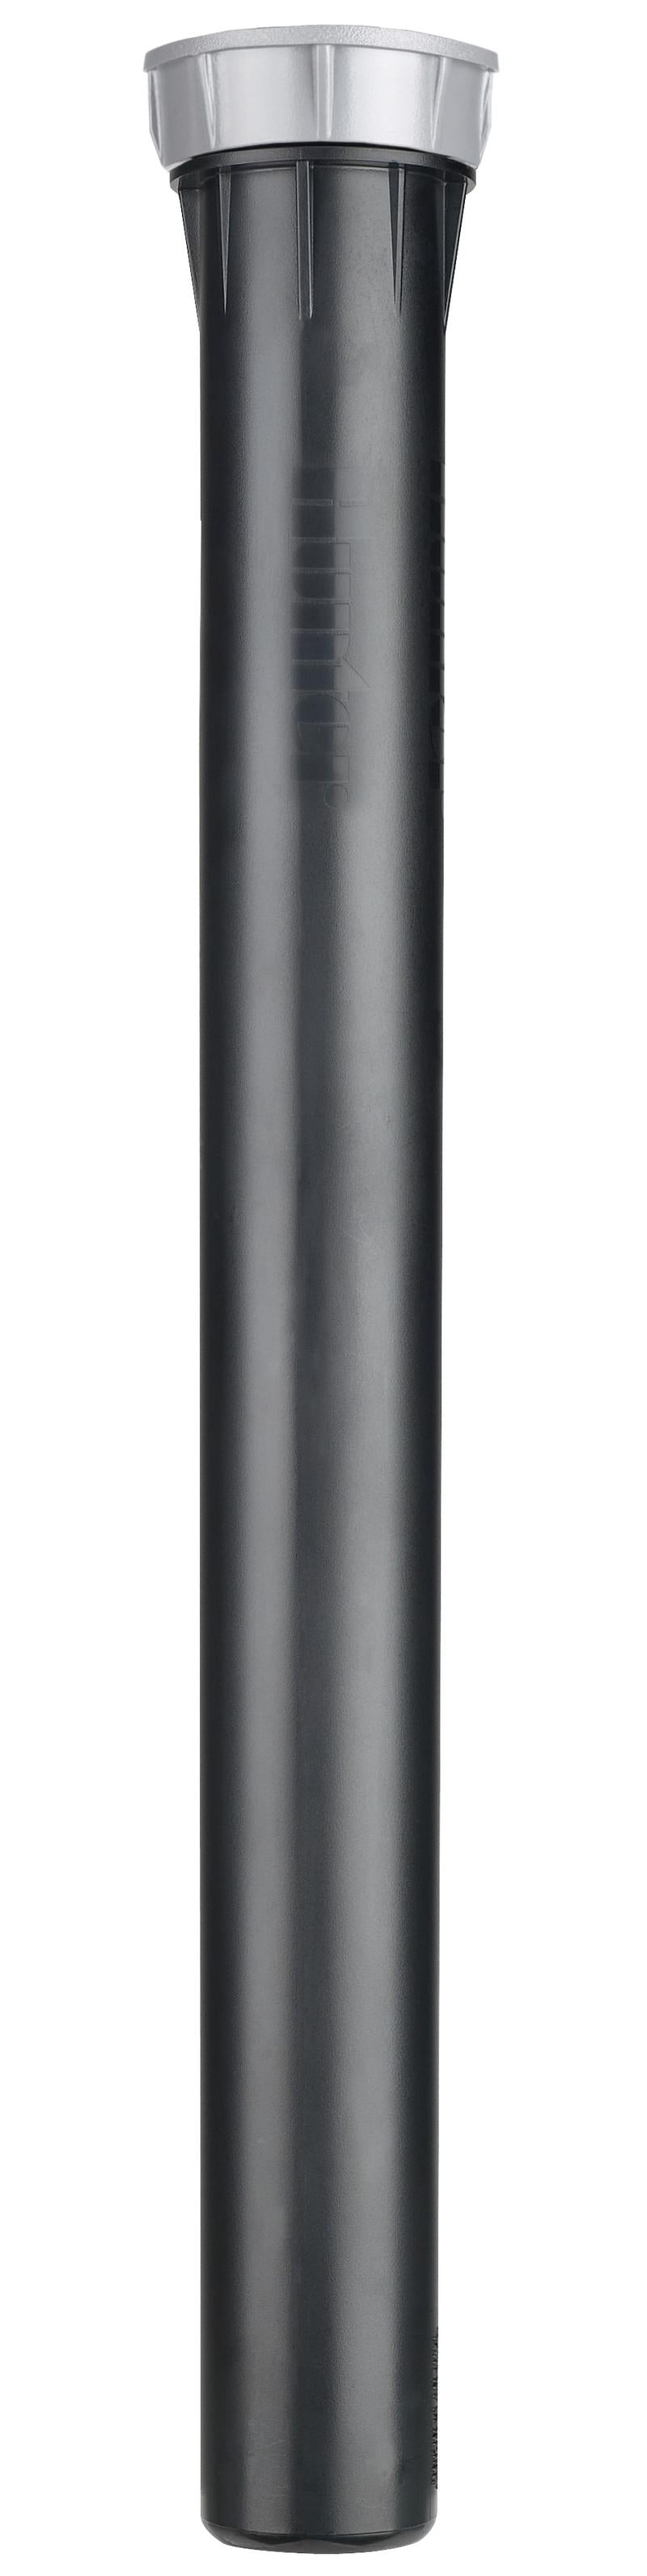 Hunter Industries PROS12PRS40 Pro-Spray Sprinkler Body, 30 cm Pop-up, 2.8 Bar Pressure Regulator, Gray Cap, ½" Inlet